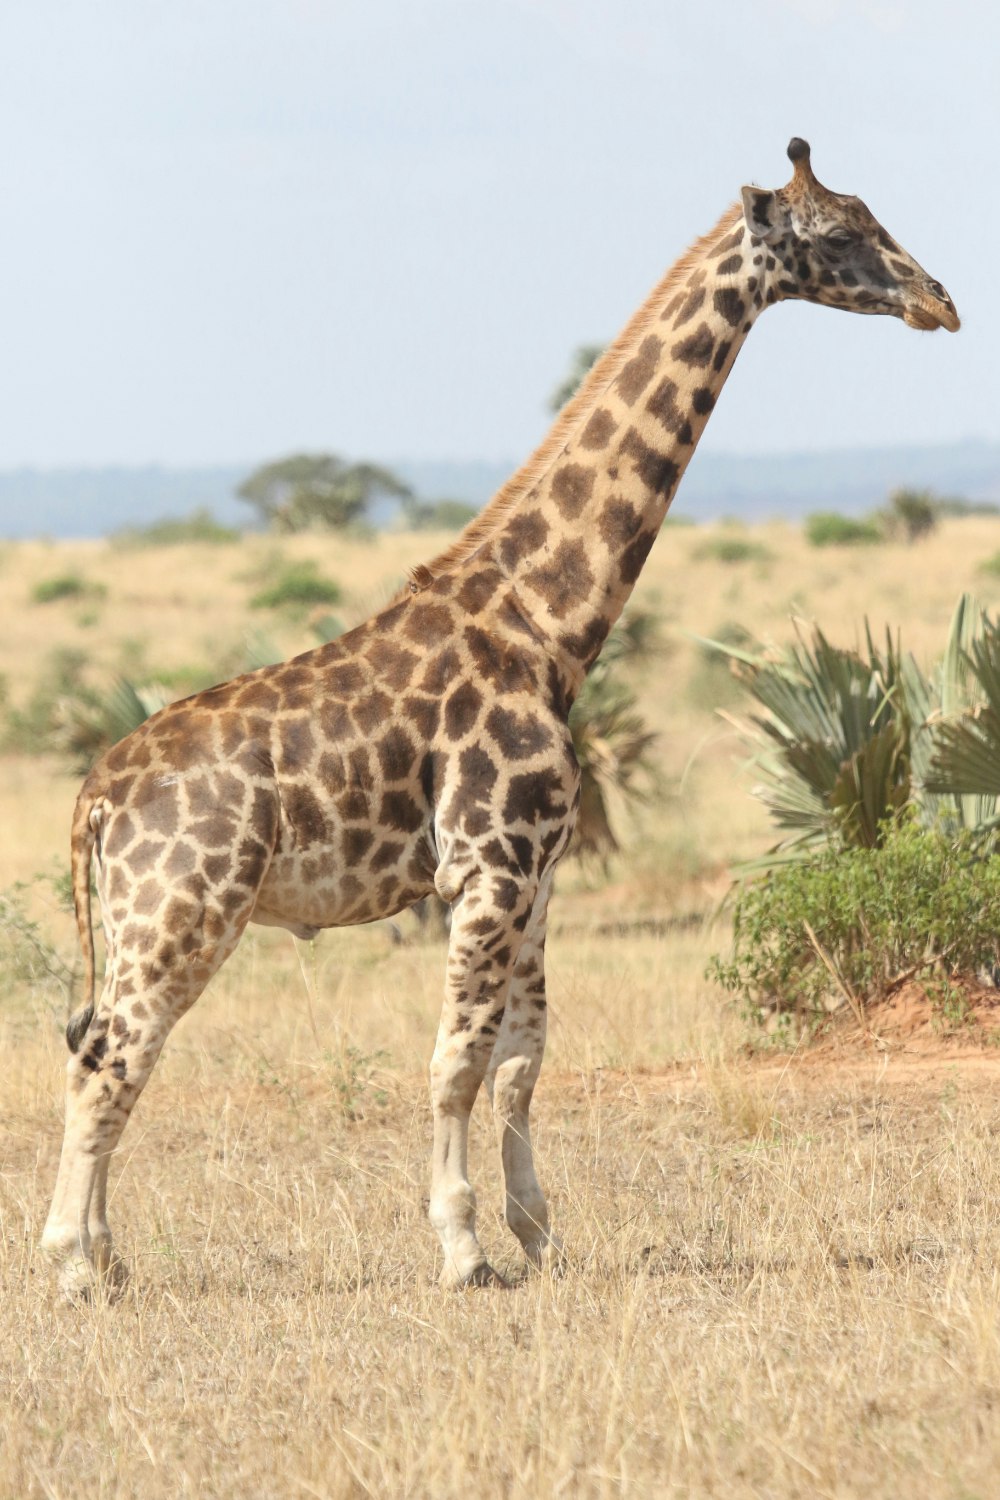 A dwarf giraffe in Uganda